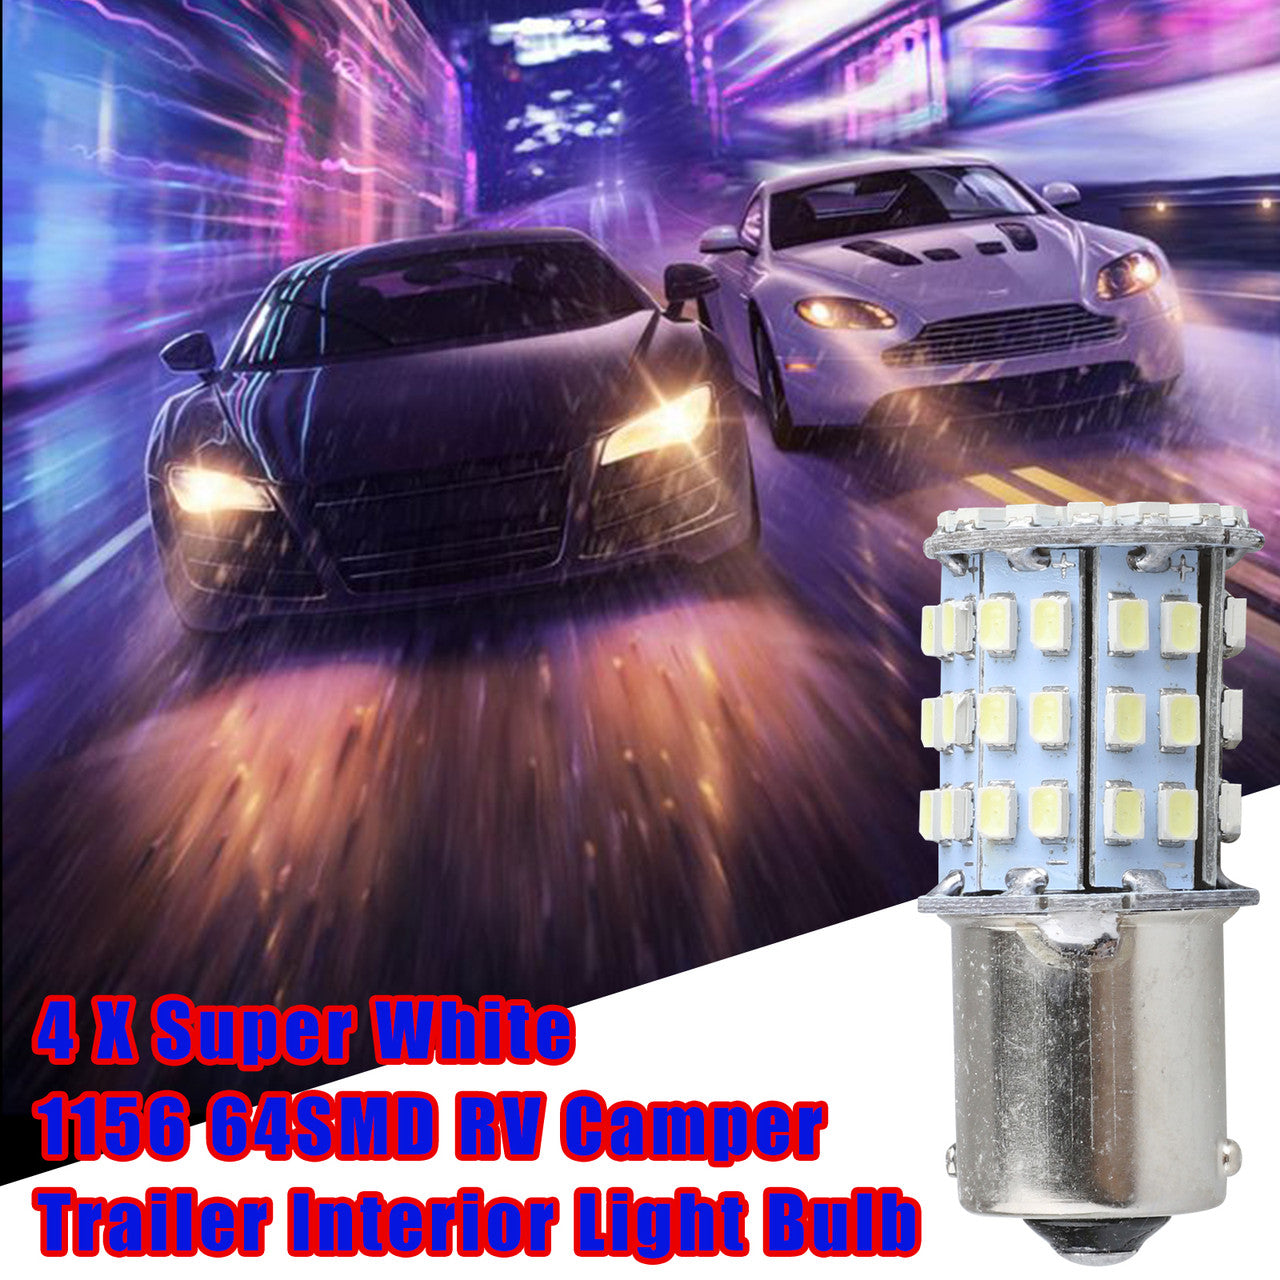 Super White 64 SMD LED 1156 1141 1003 RV Camper Trailer Interior Light Bulb, 4Pcs